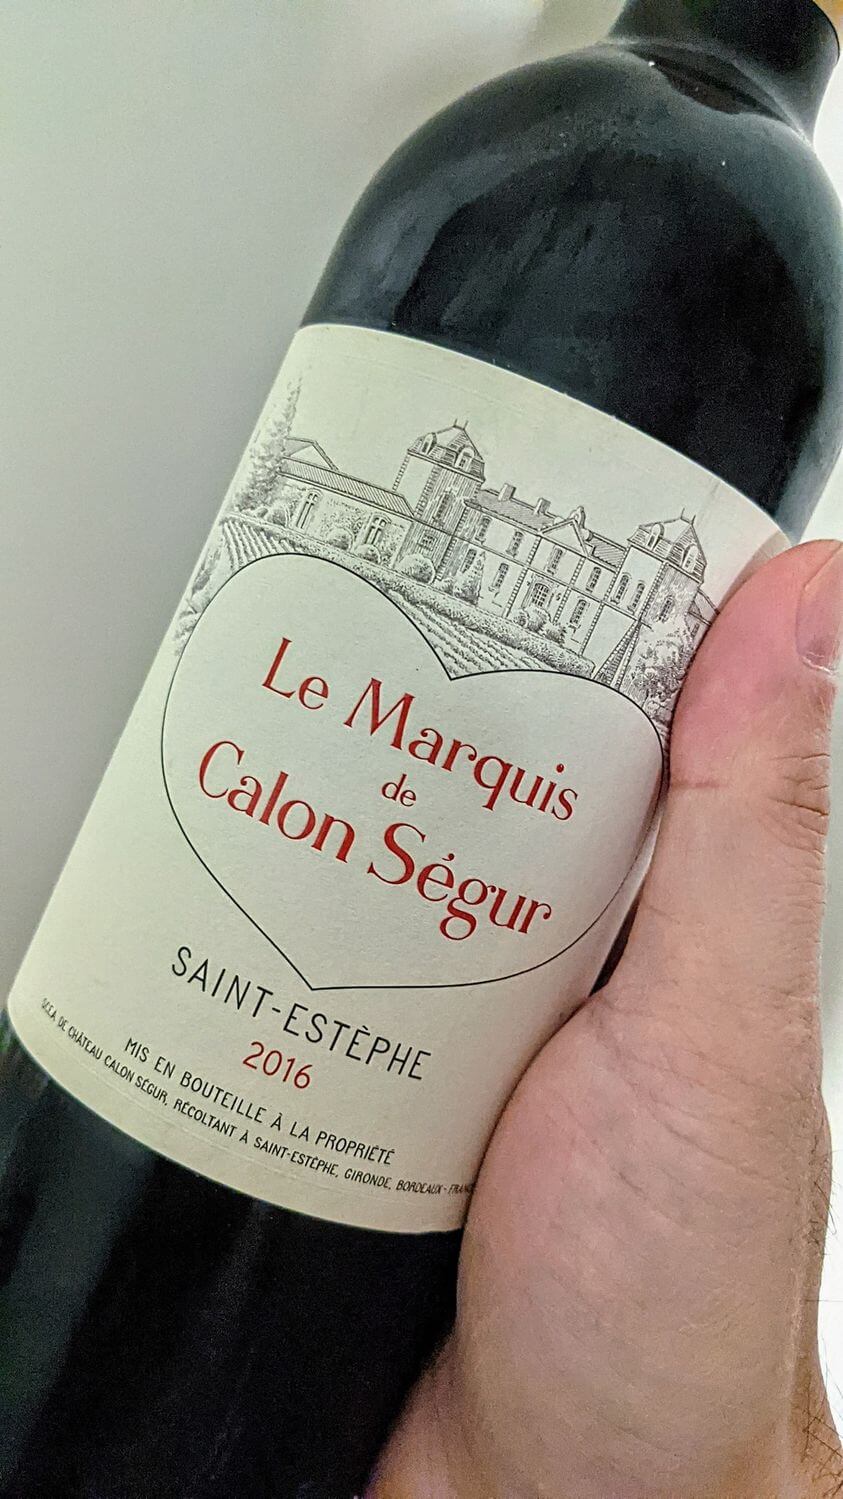 Le Marquis de Calon Ségur 2016& Bottega Wine Glasses Gift Set with Engraving |2016凱隆世家副牌&Bottega紅酒杯套裝(含文字人像雕刻) - Design Your Own Wine